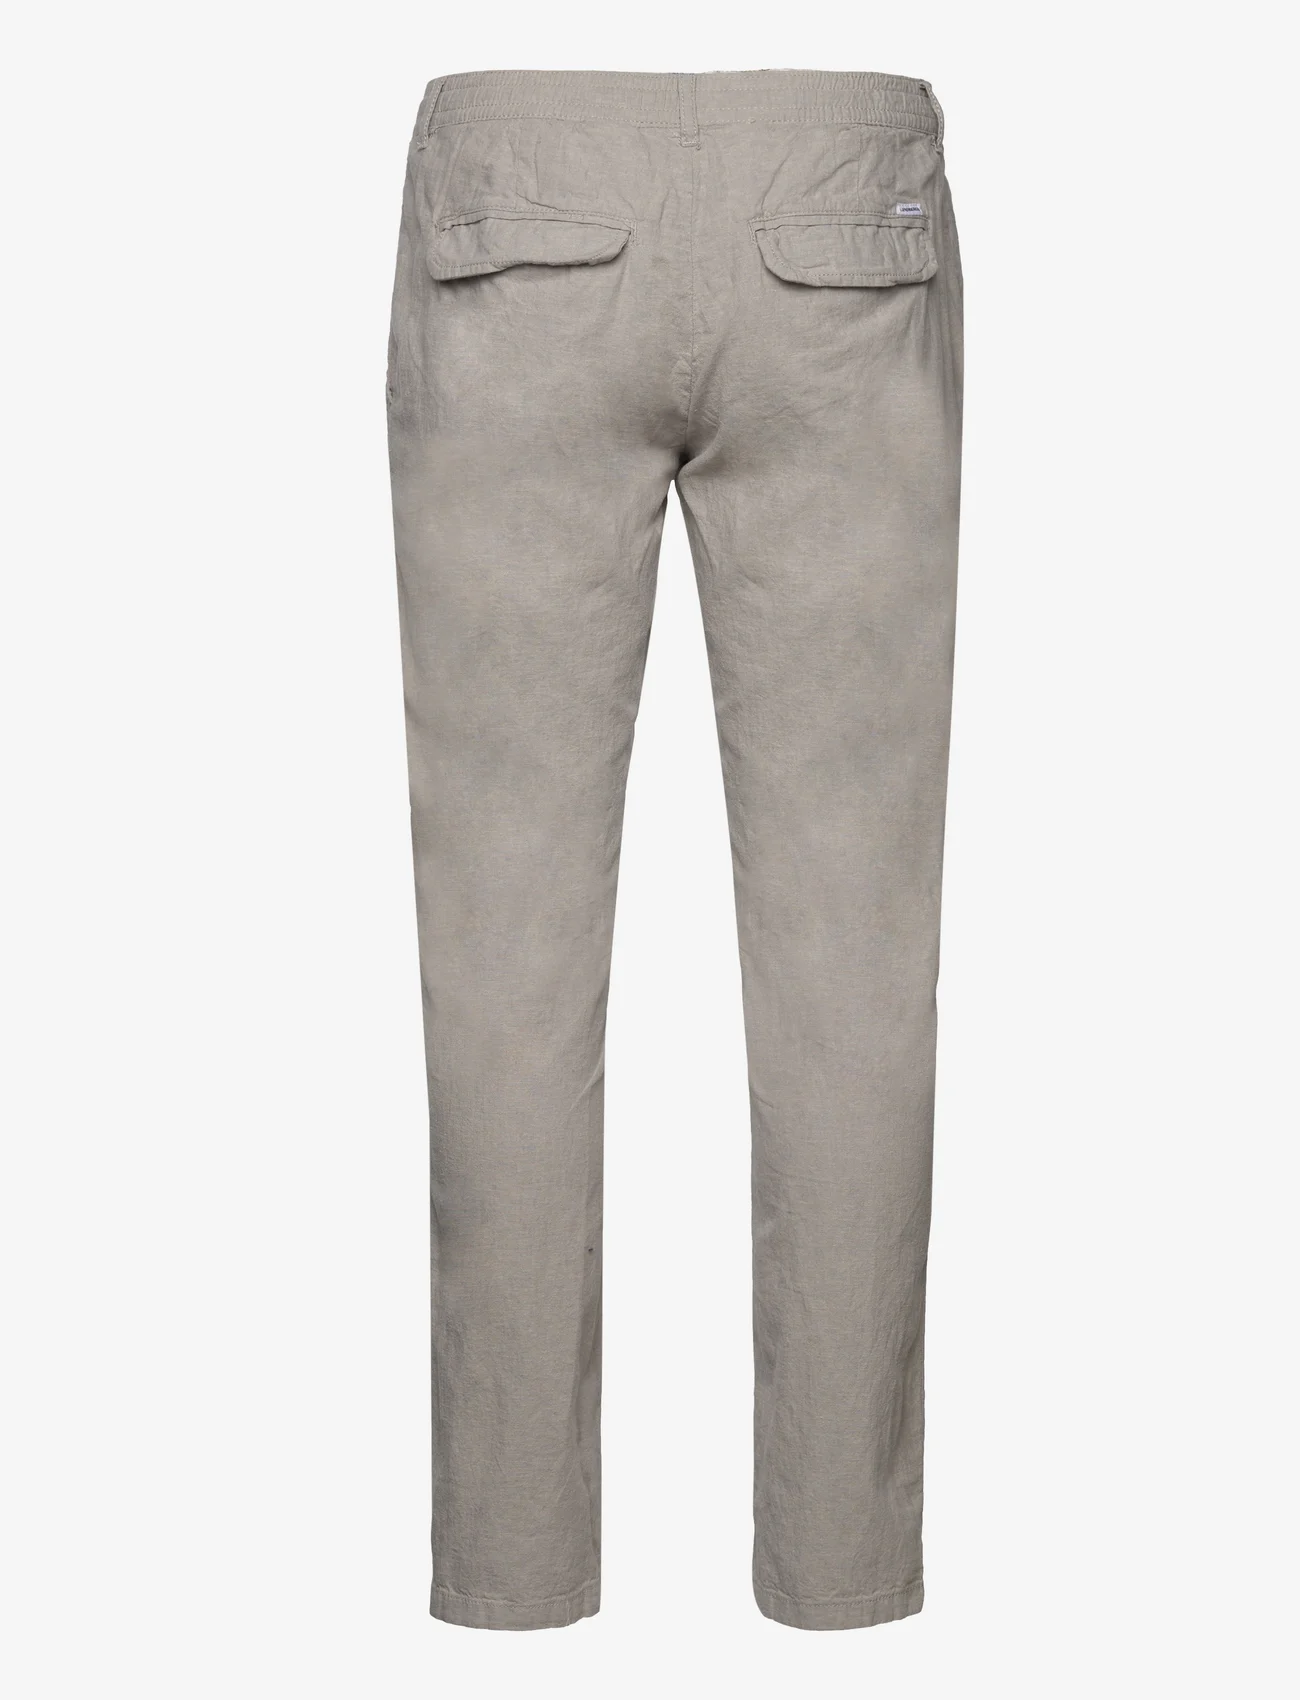 Lindbergh - Linen pants - pellavahousut - grey - 1